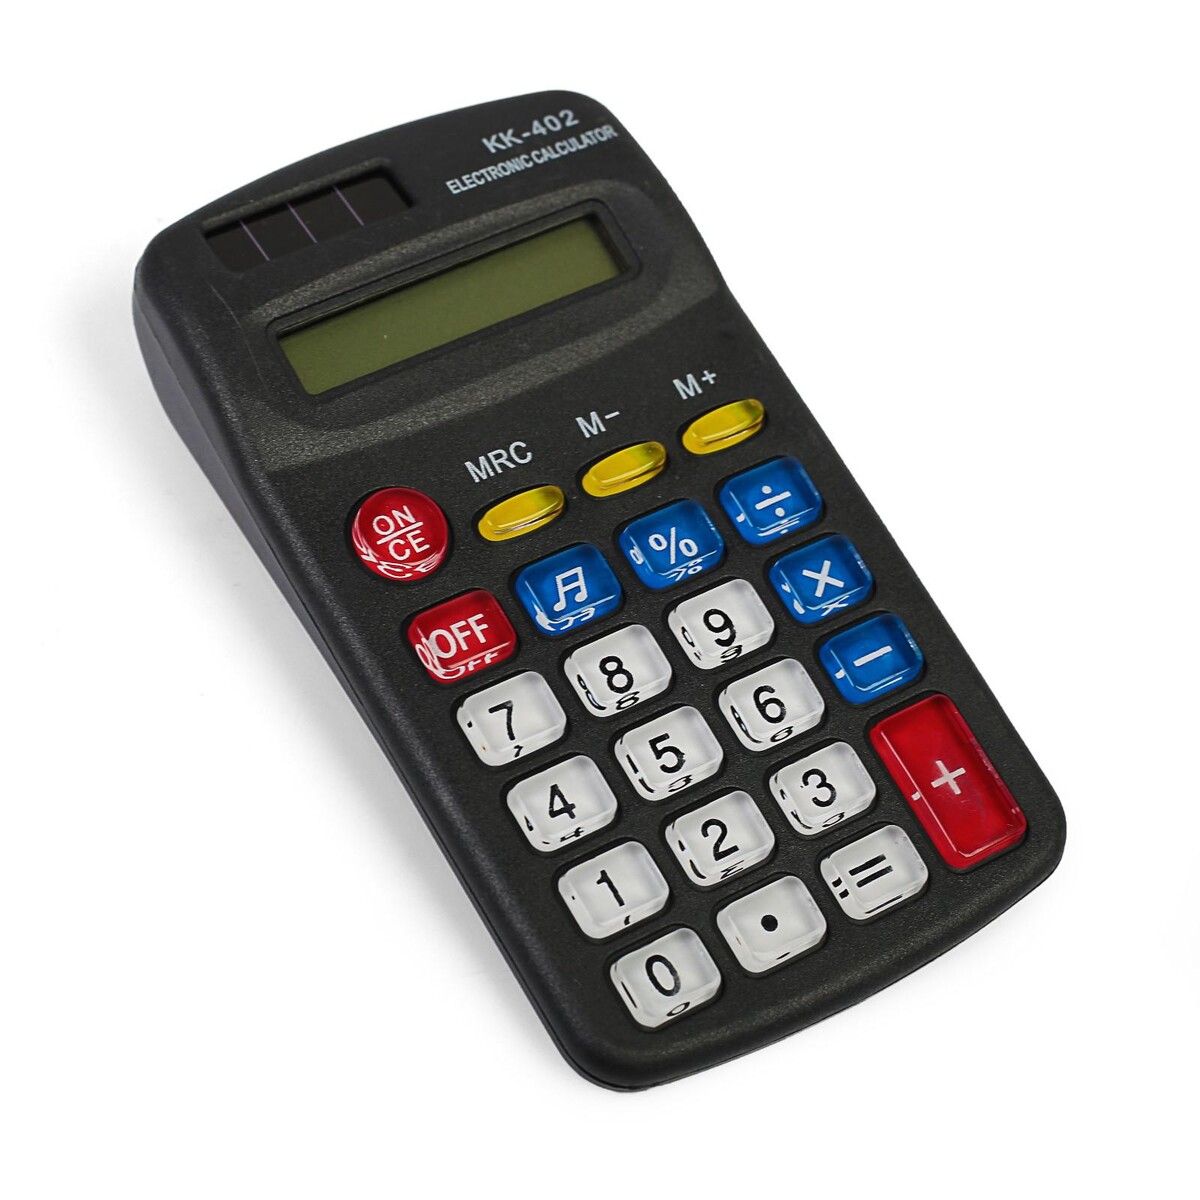 Калькулятор карманный, 8-разрядный калькулятор карманный с чехлом 8 разрядный kc 888 работает от батарейки таблетка ag 10